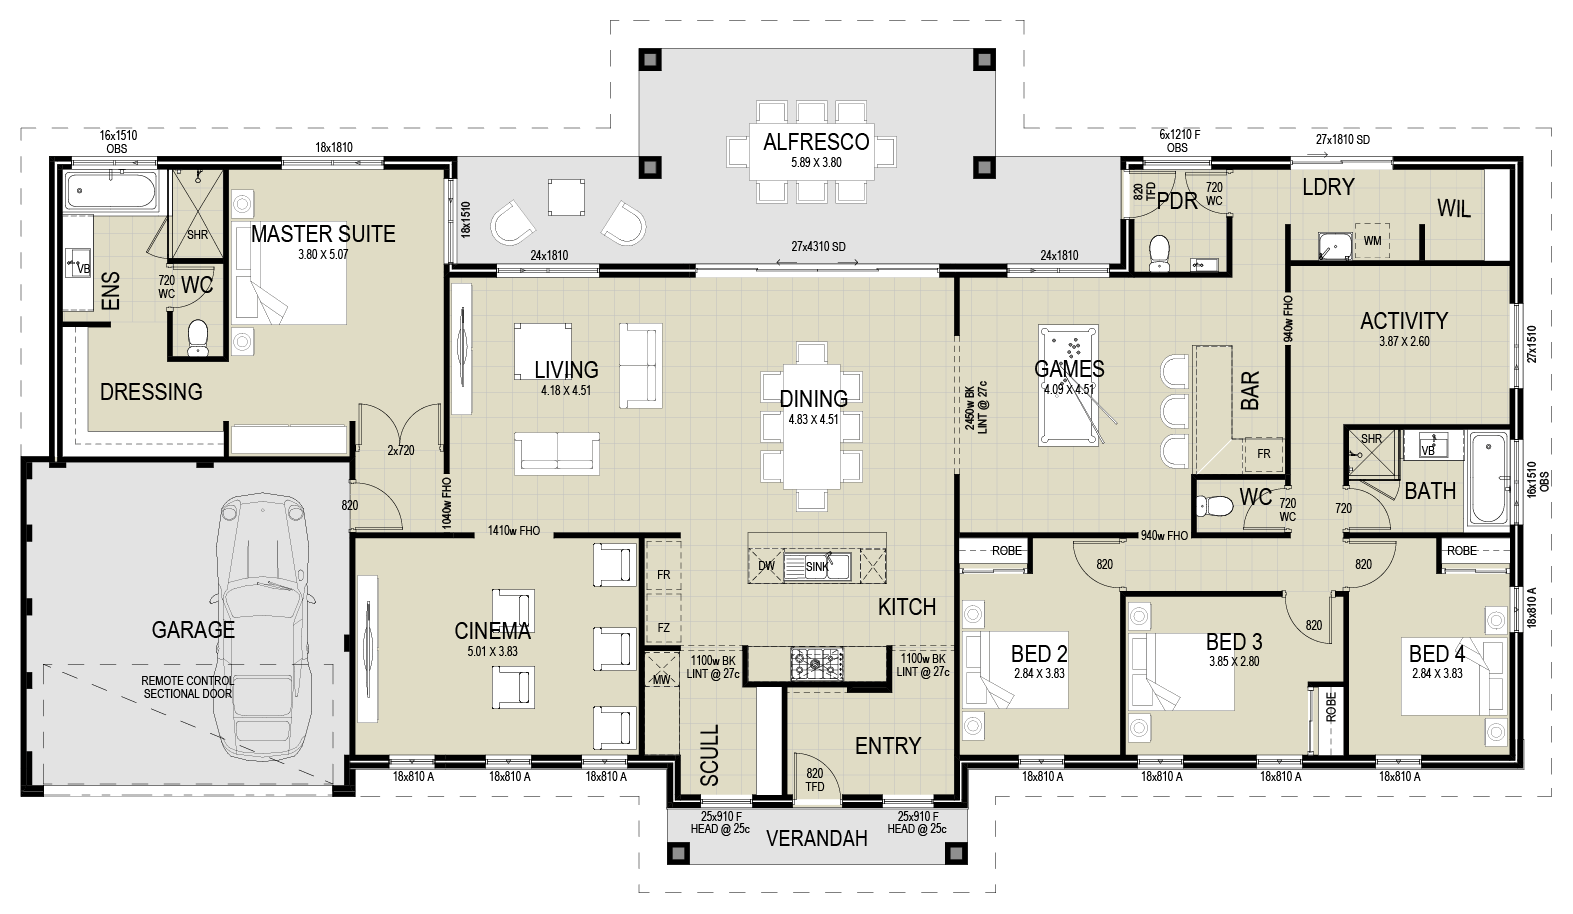 The Estate floor plan